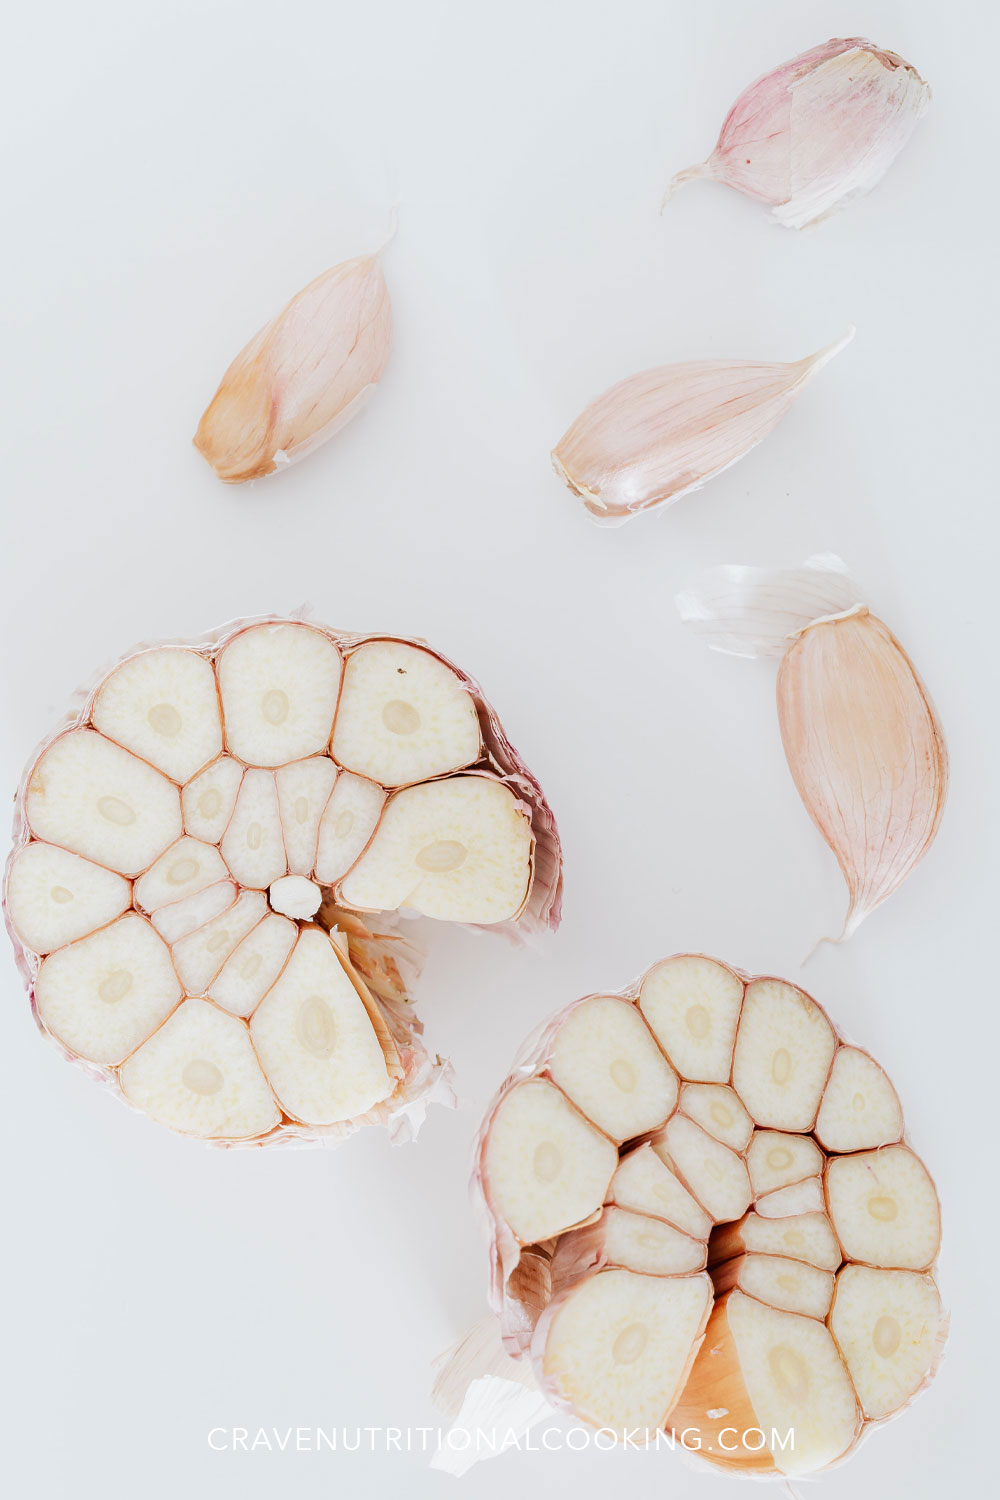 split open garlic cloves showing benefits of garlic